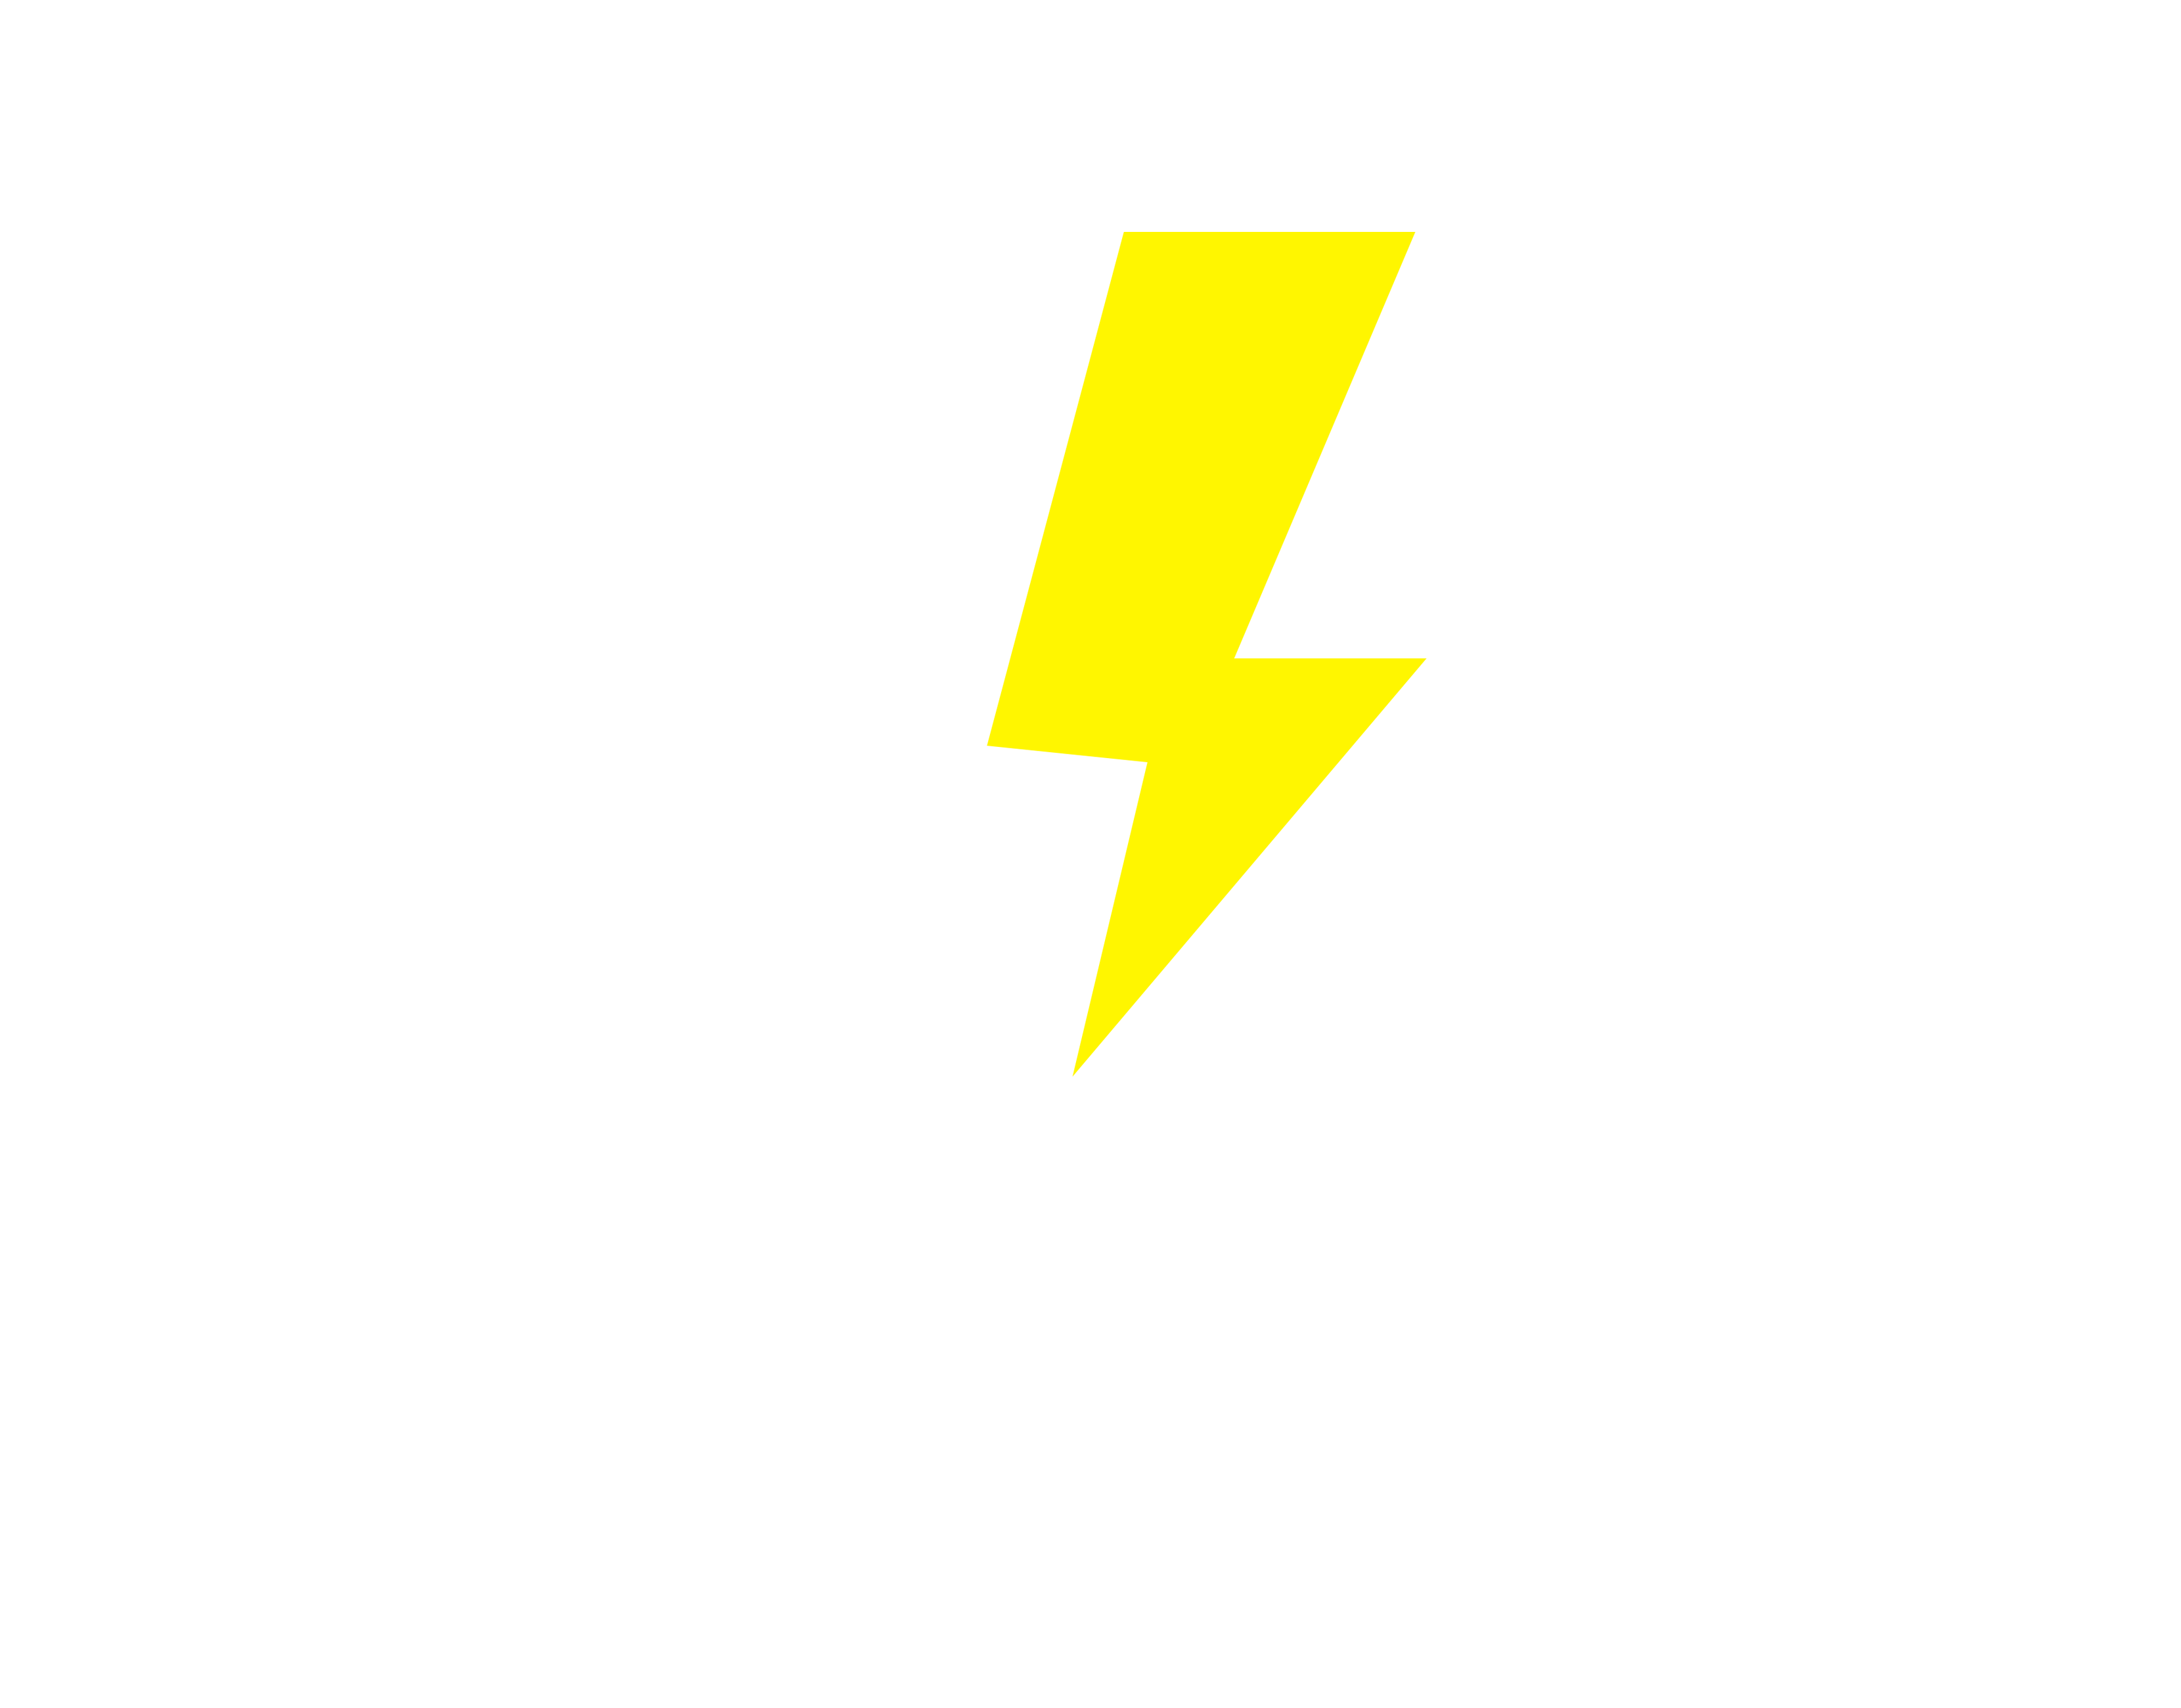 Lightning Flash Cutie Mark by dragondude51796 on DeviantArt